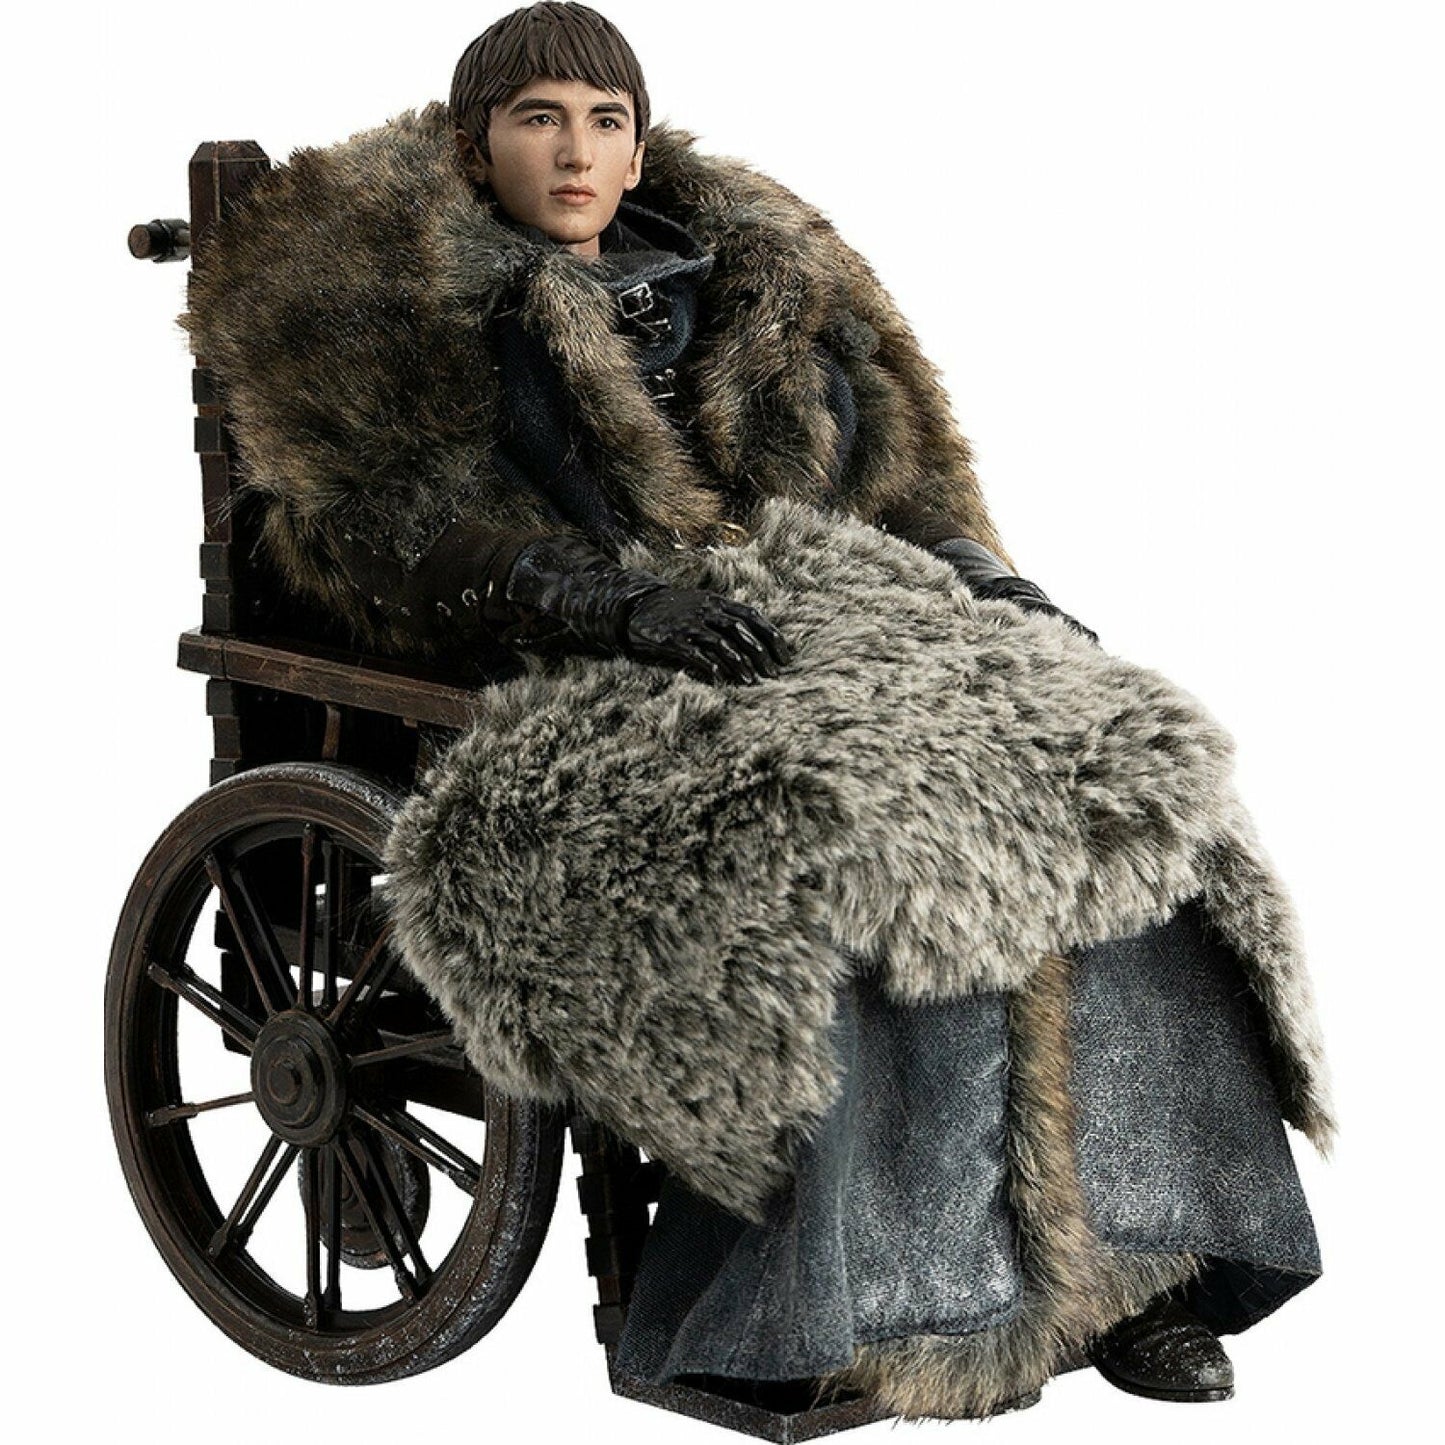 Threezero - Game of Thrones - Bran Stark Standard Version